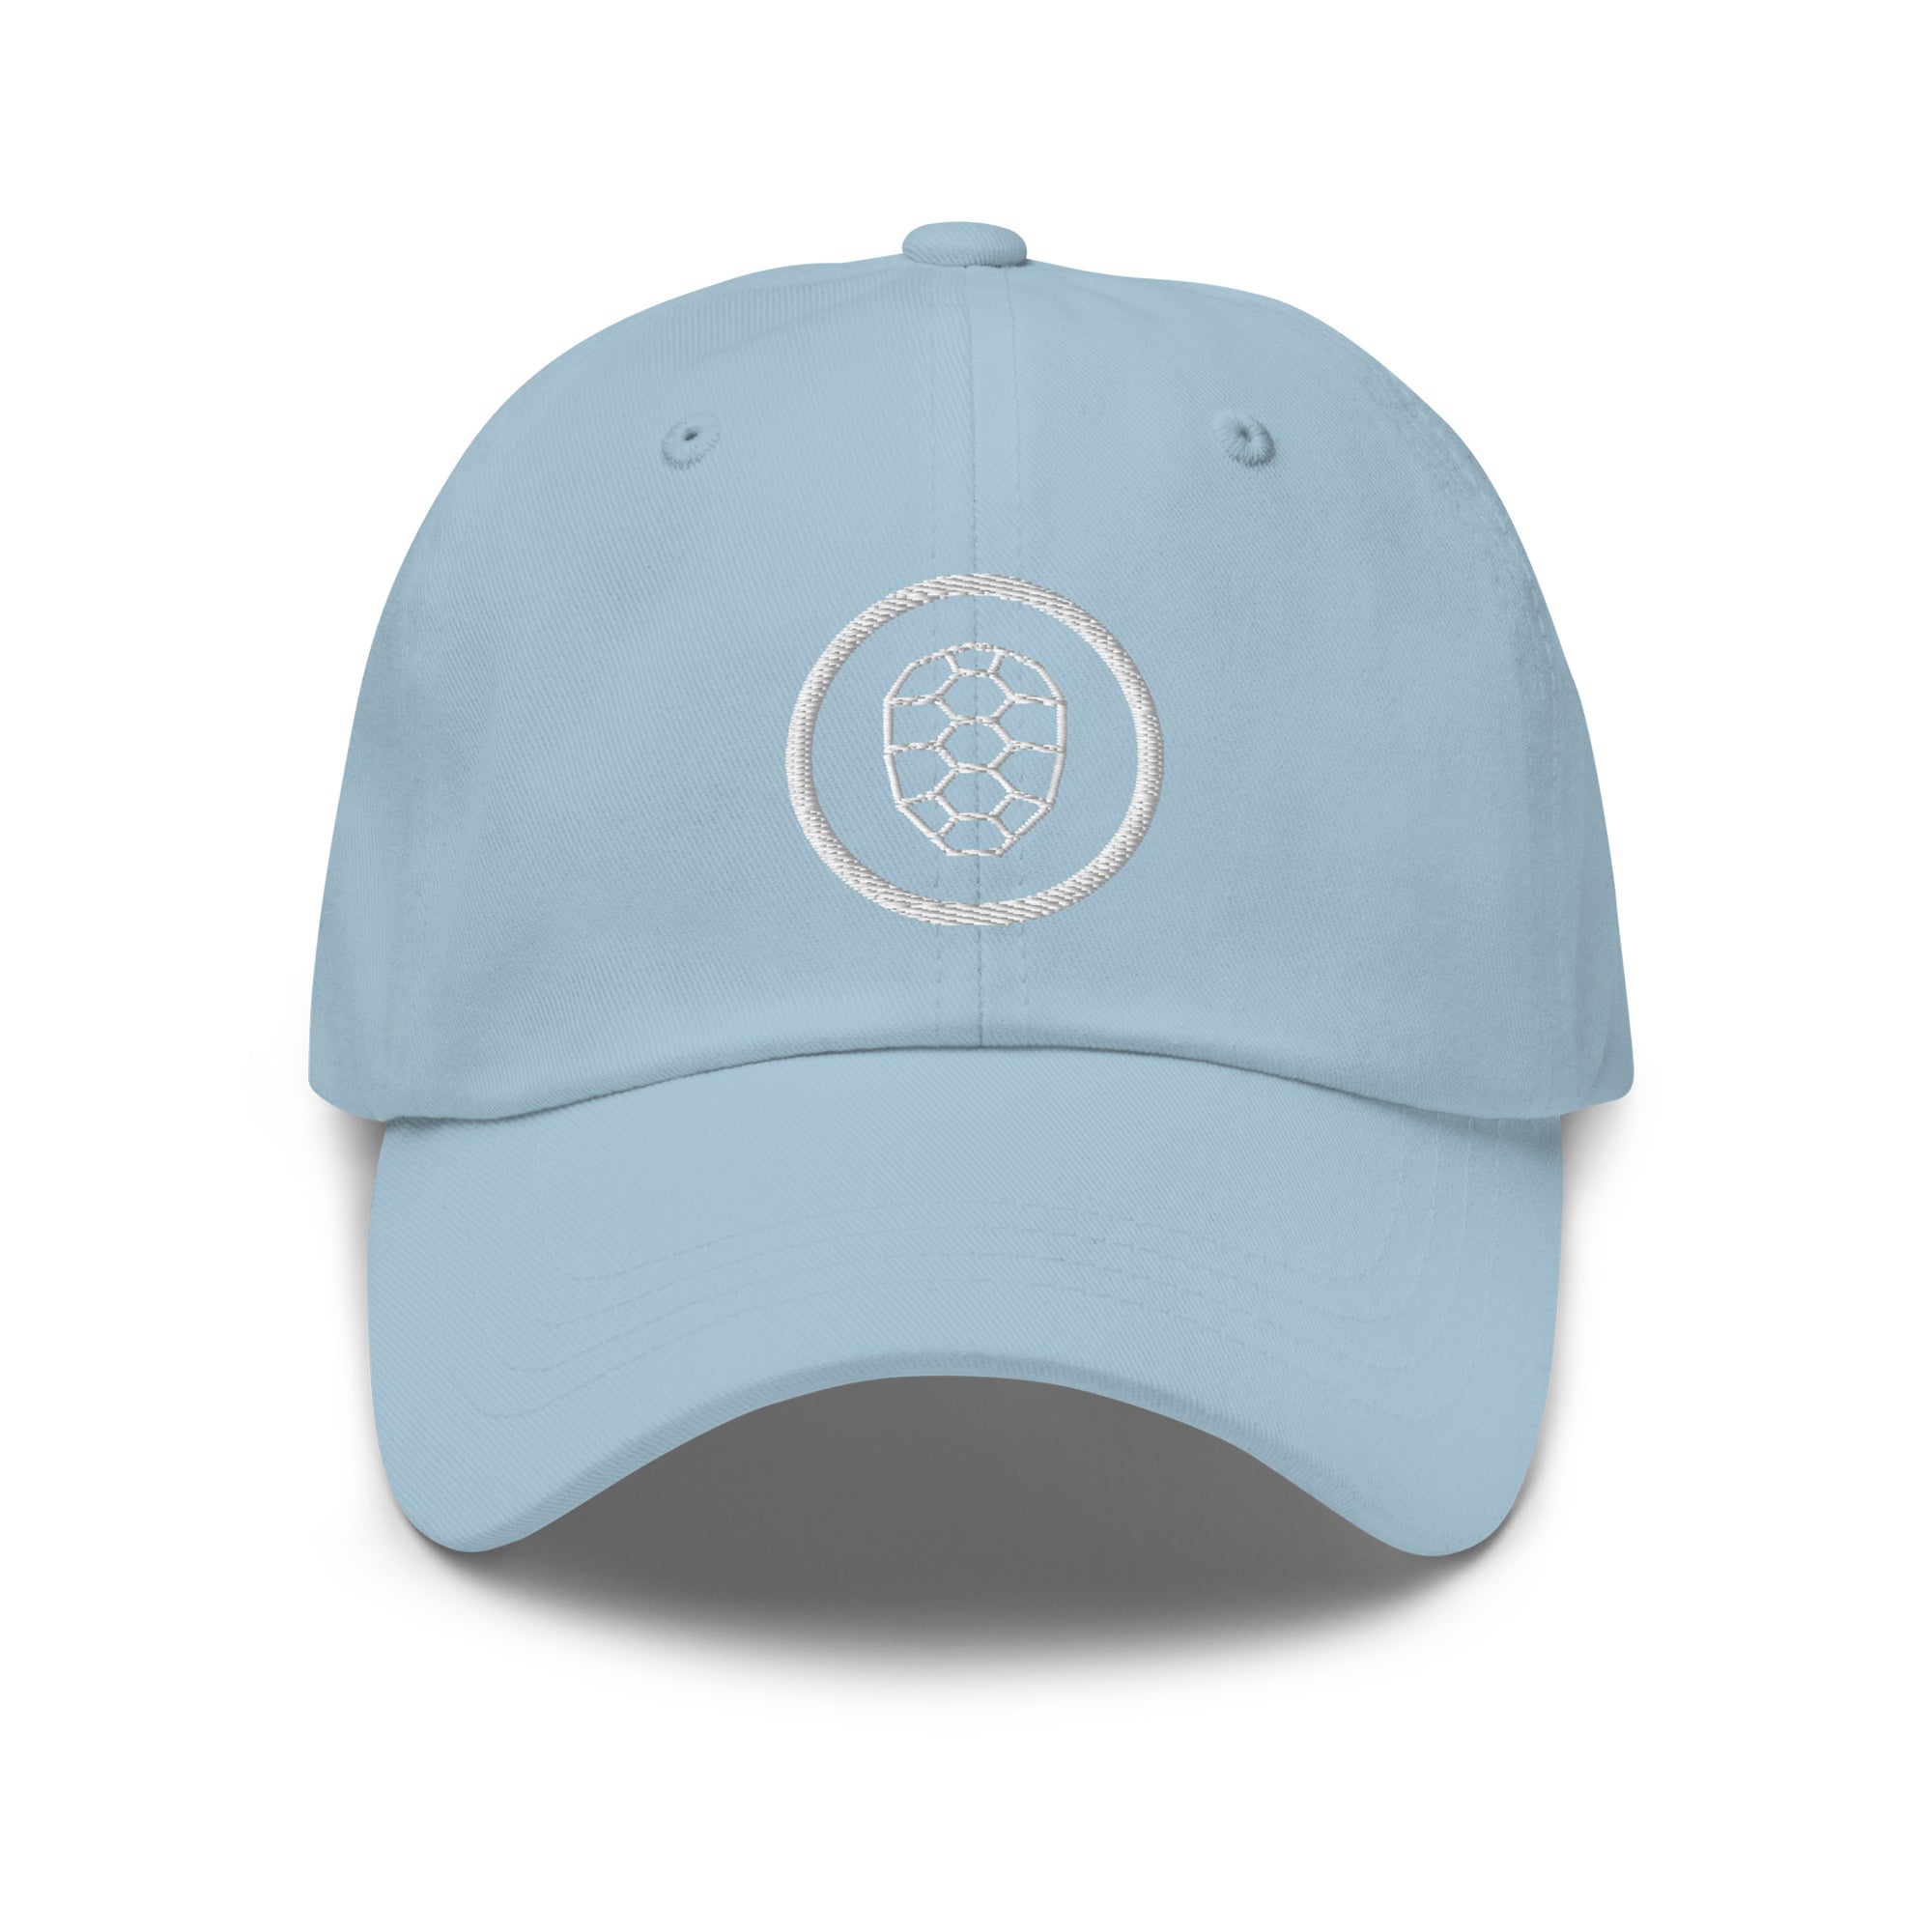 DreamBreeze Cap in Light Blue – ONETURTLE